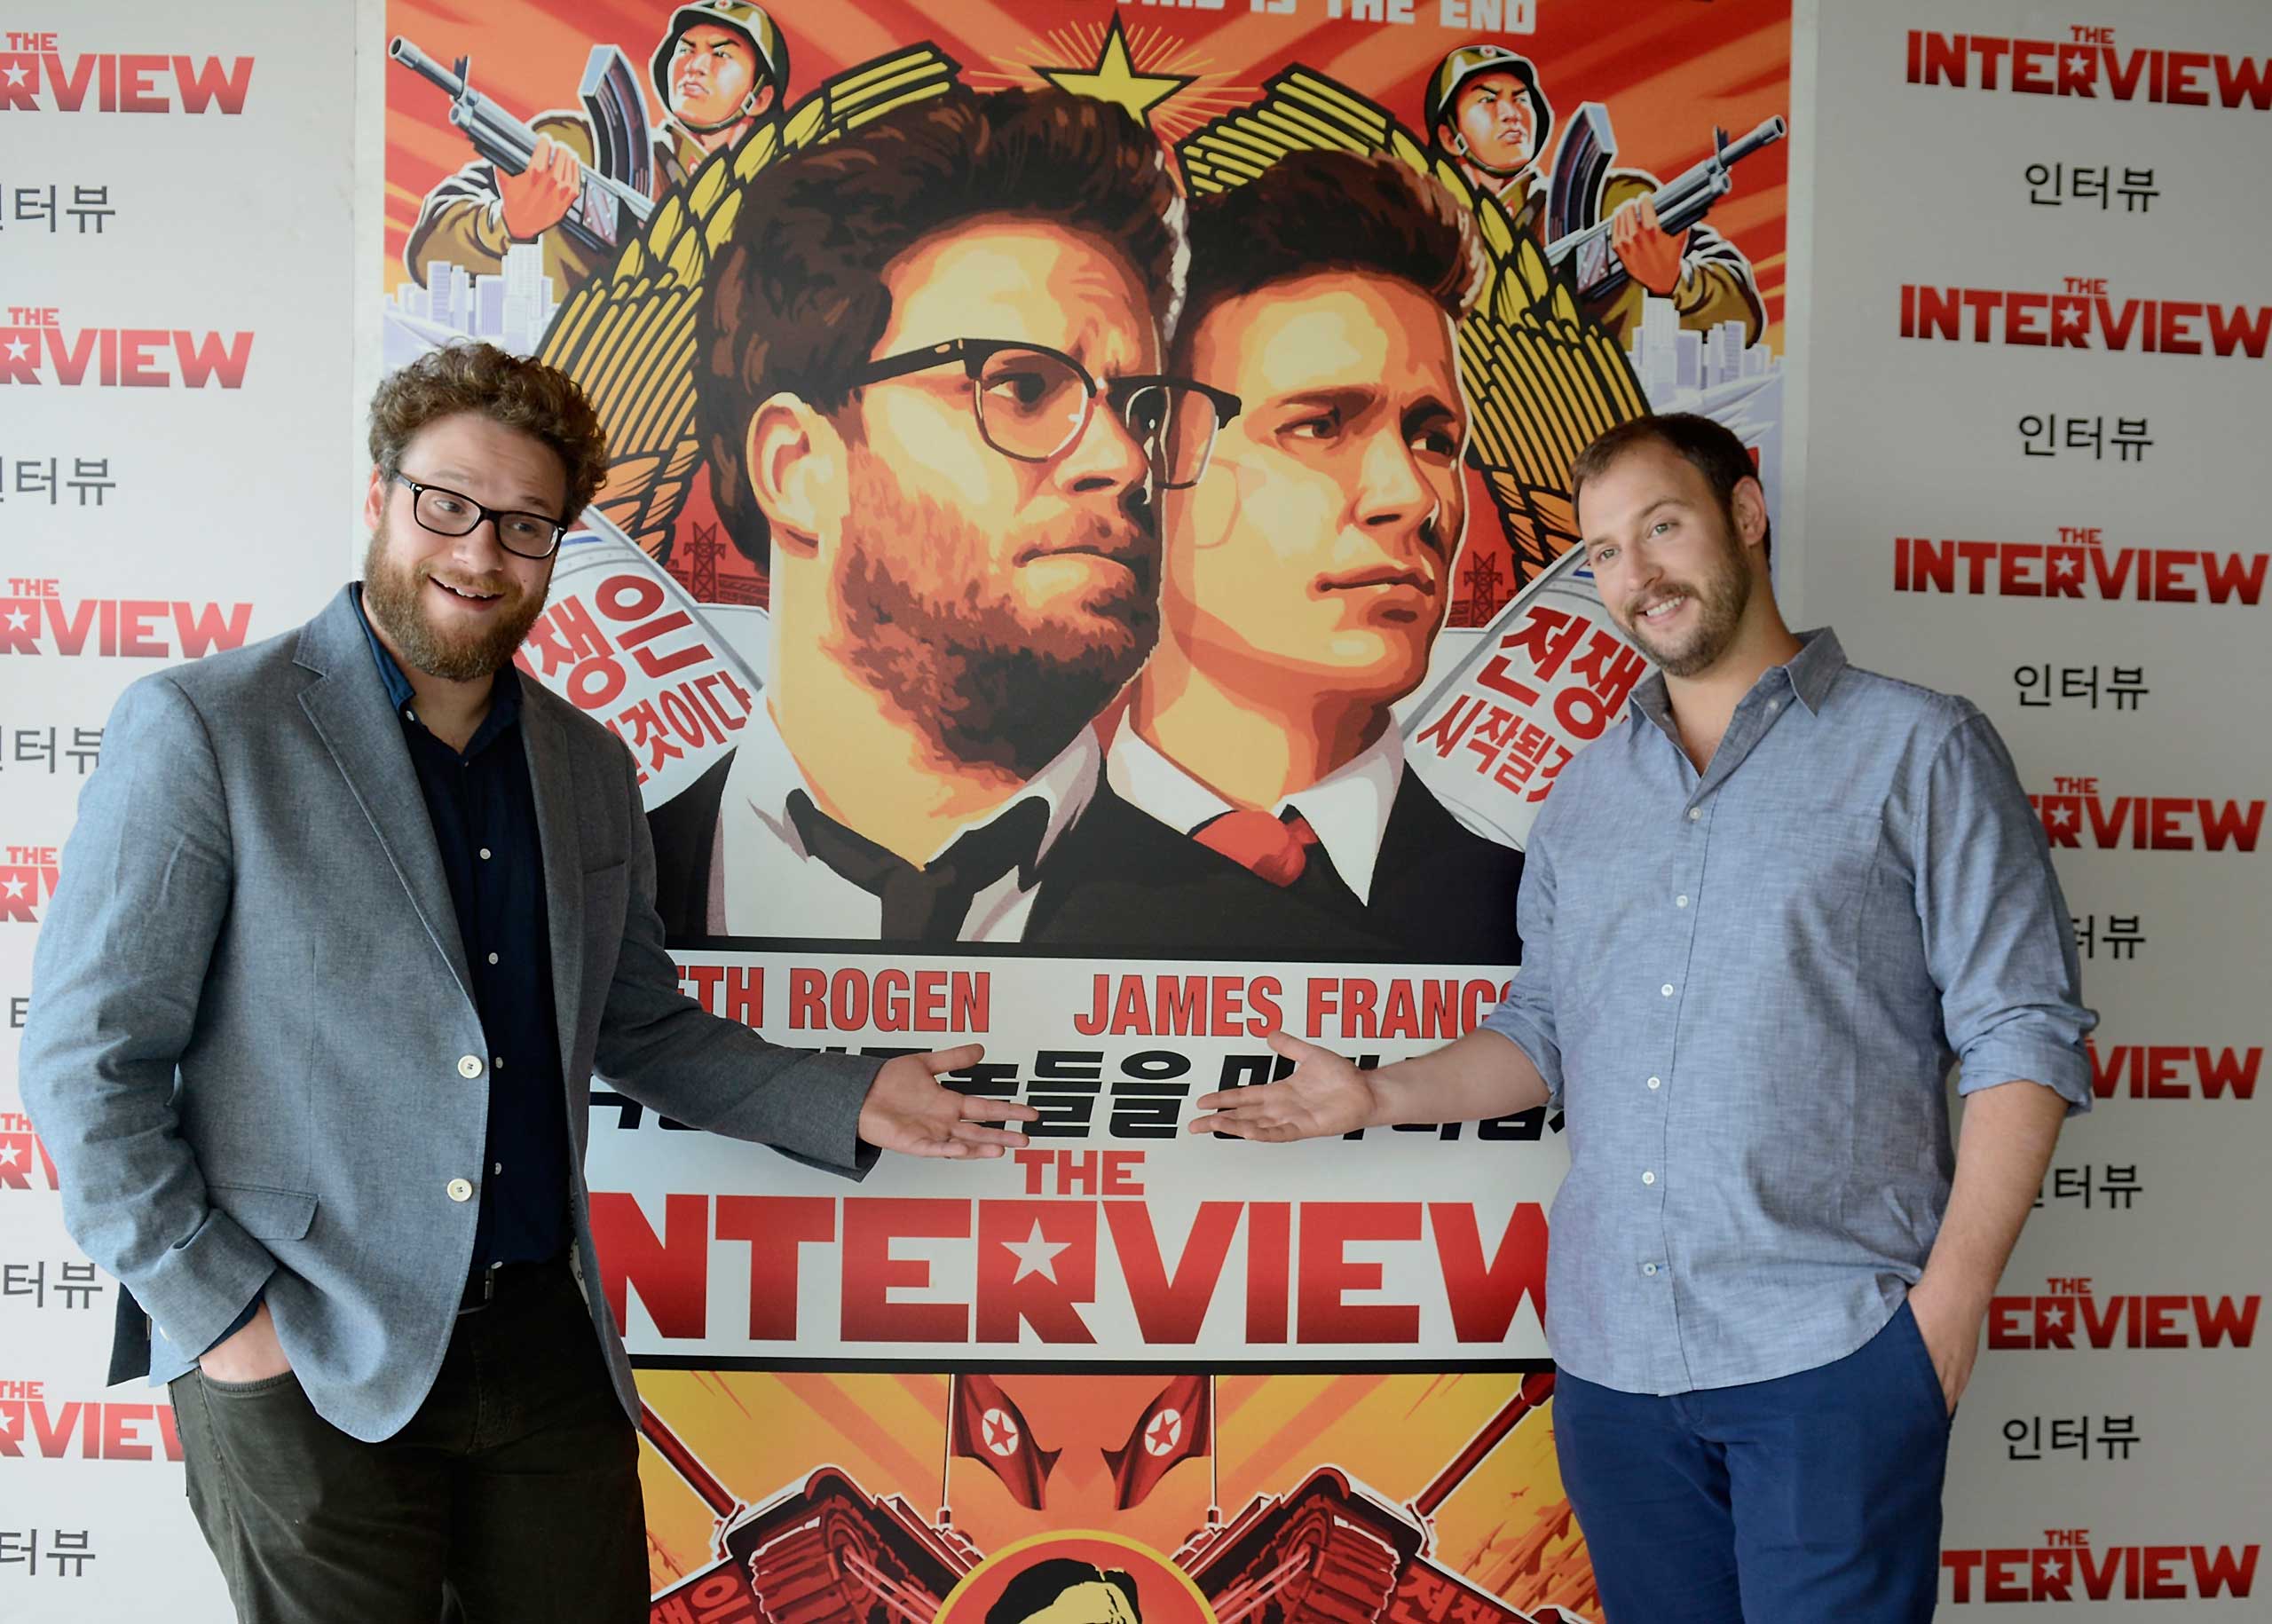 The Interview, Seth Rogan and Evan Goldberg